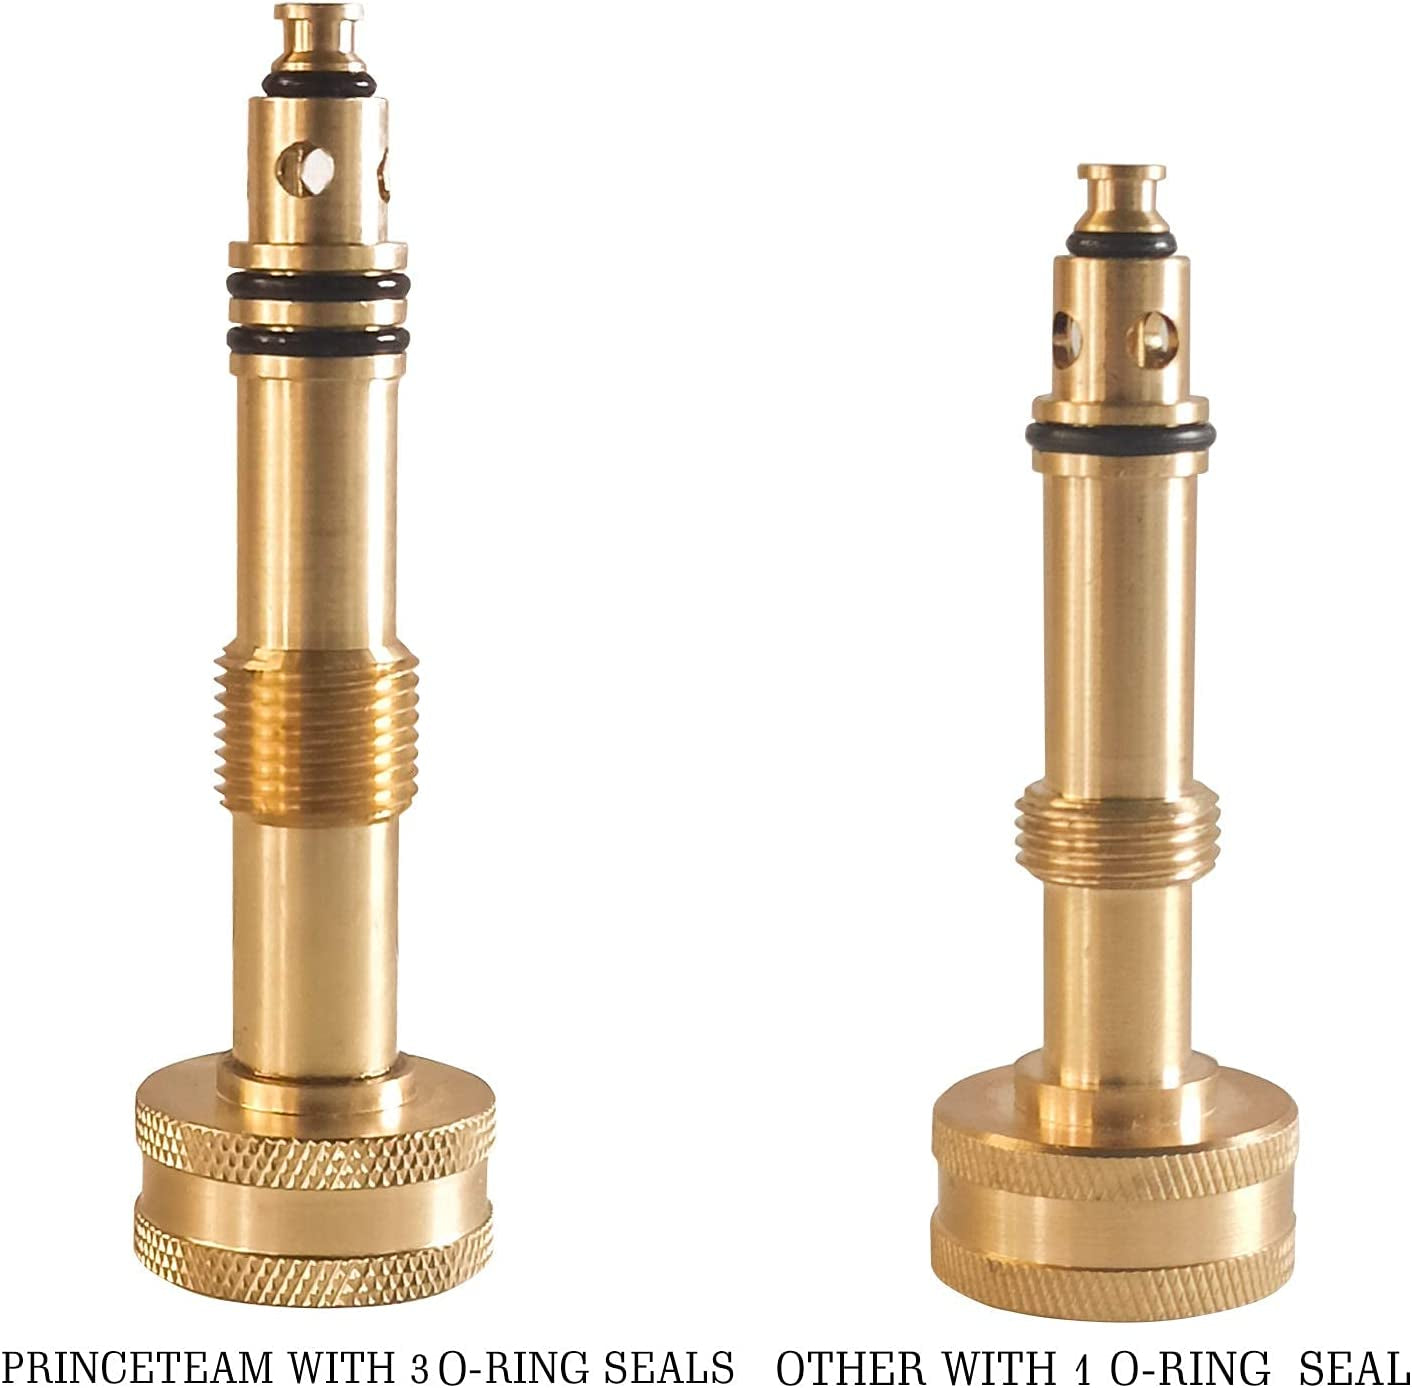 4" Heavy-Duty Brass Hose Nozzle with 10 Garden Hose Rubber Washers Adjustable Twist Hose Nozzle